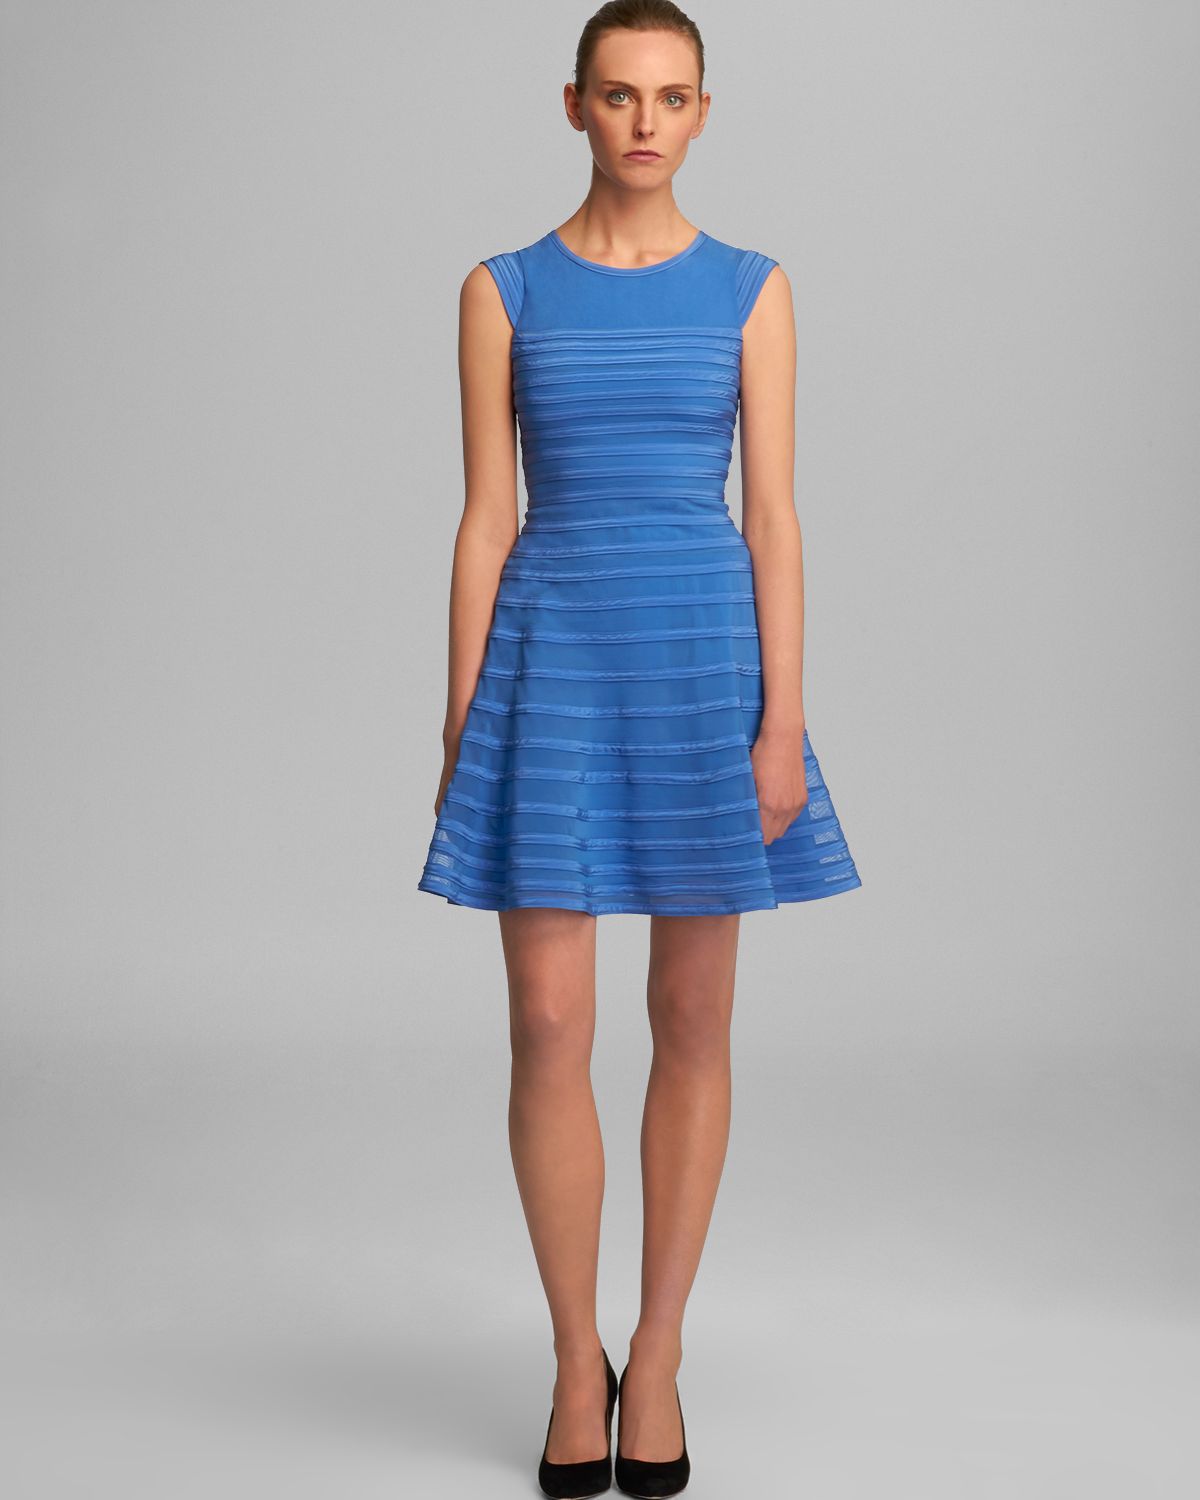 Lyst - Halston Flare Skirt Dress Cap Sleeve in Blue